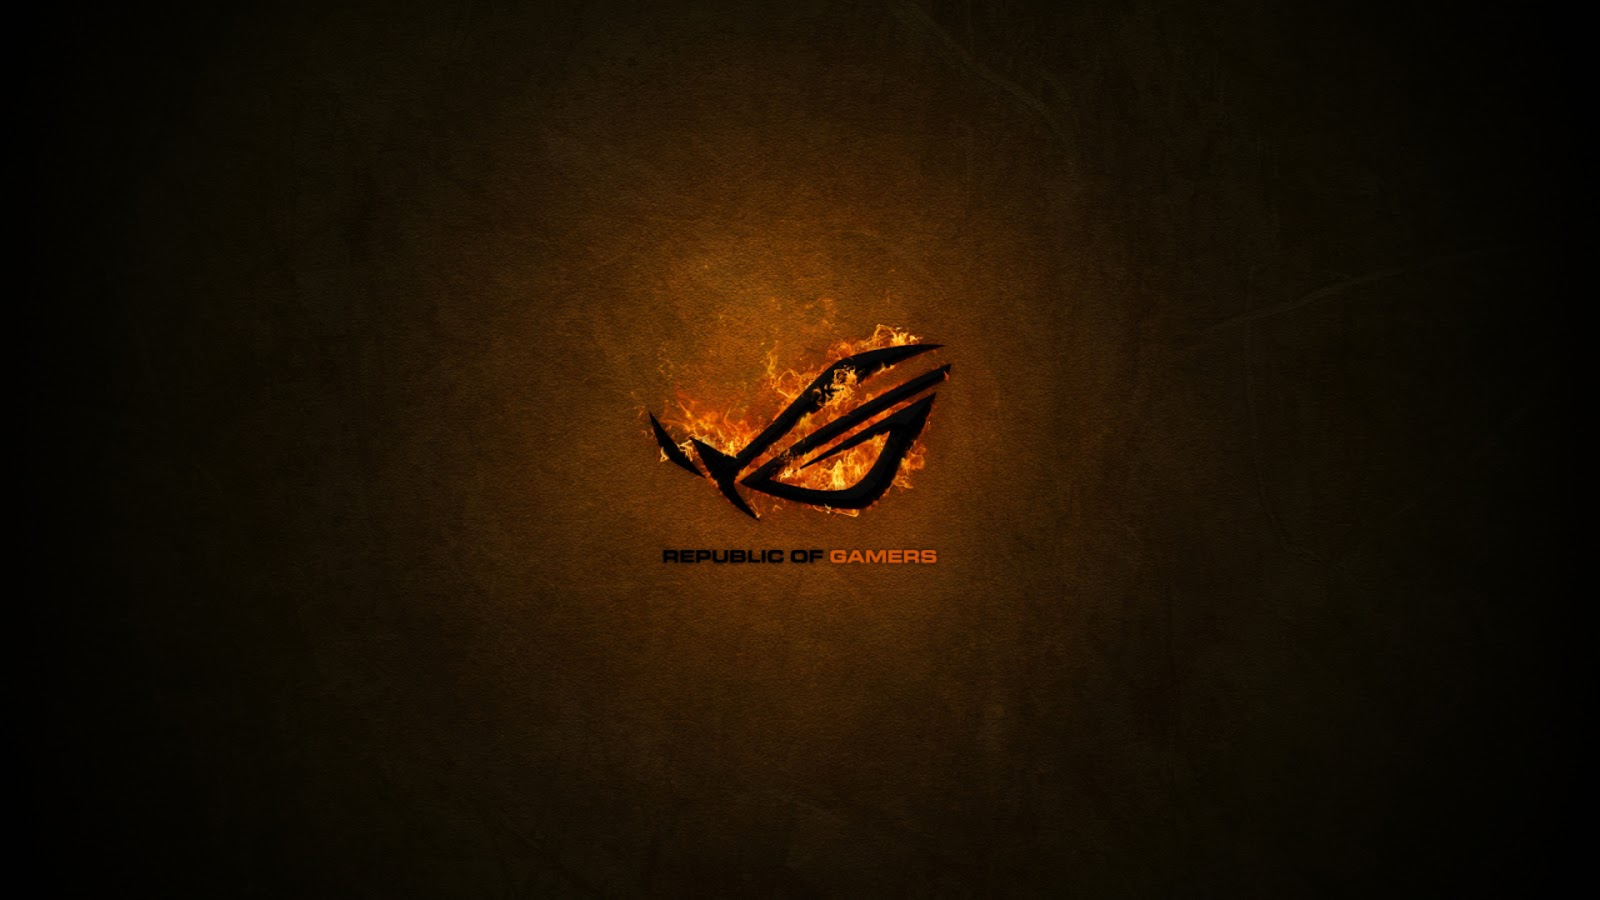 Republic of gamers rog logo on fire computer asus HD Wallpaper Dark 1600x900